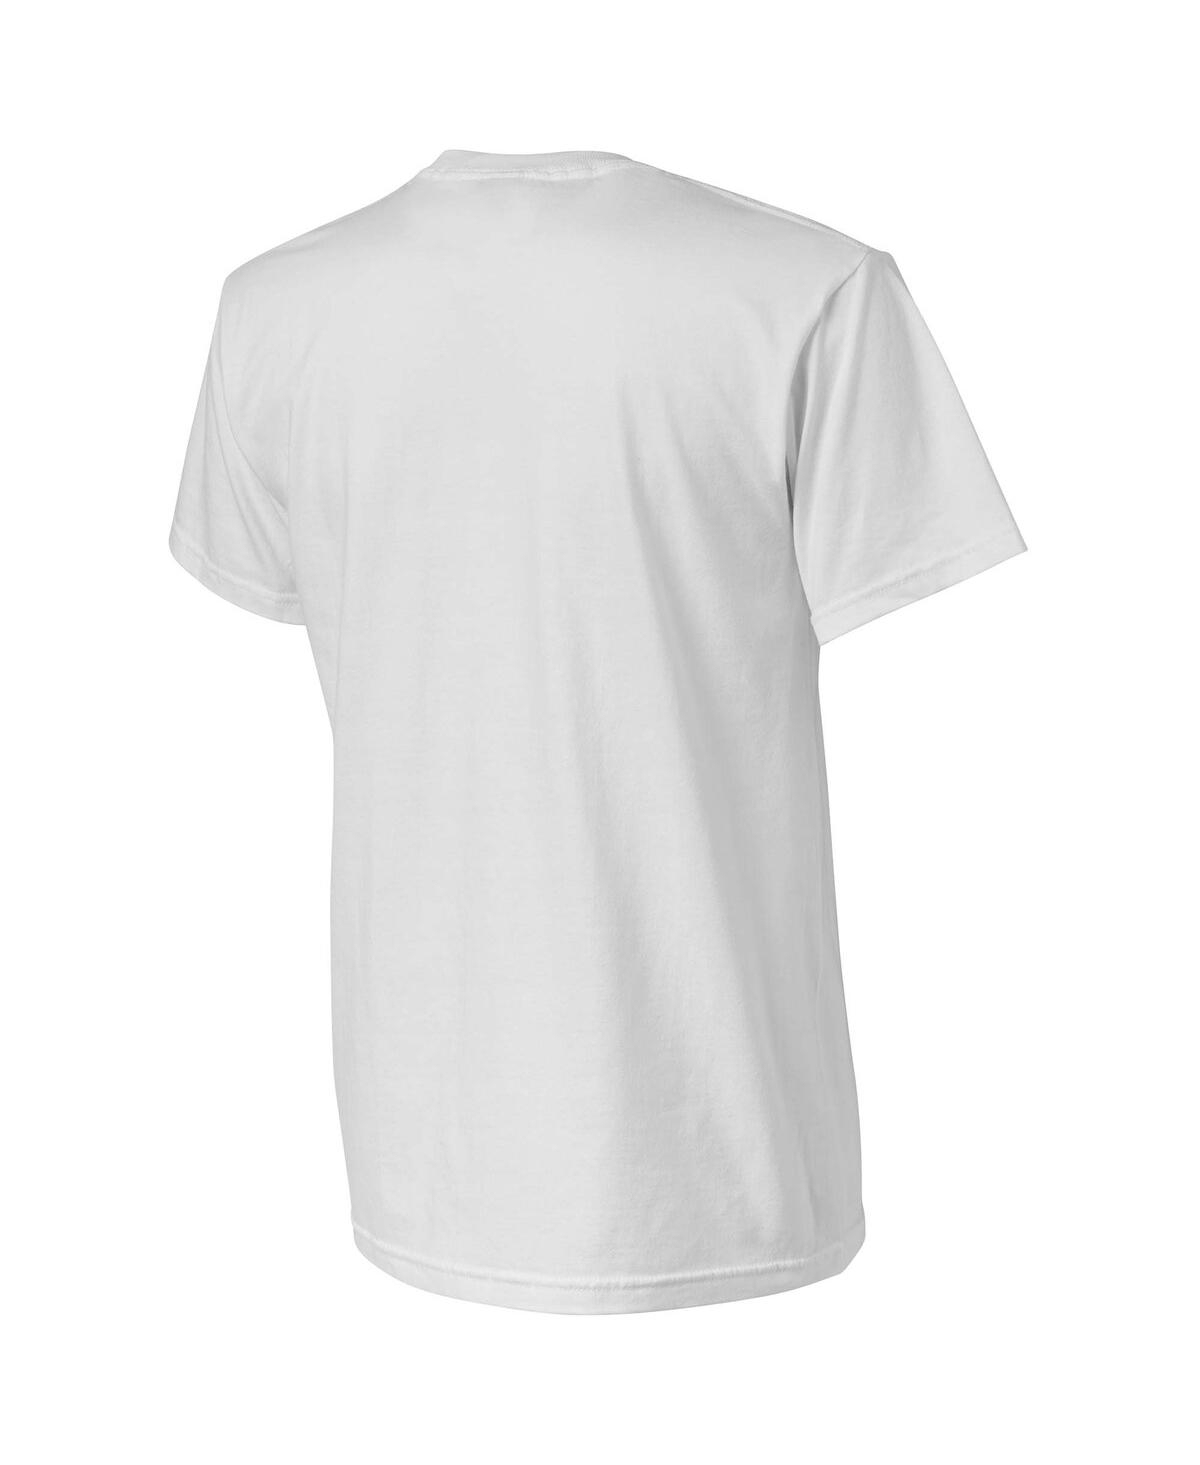 Shop Nba Exclusive Collection Men's Nba X Naturel White Los Angeles Lakers No Caller Id T-shirt